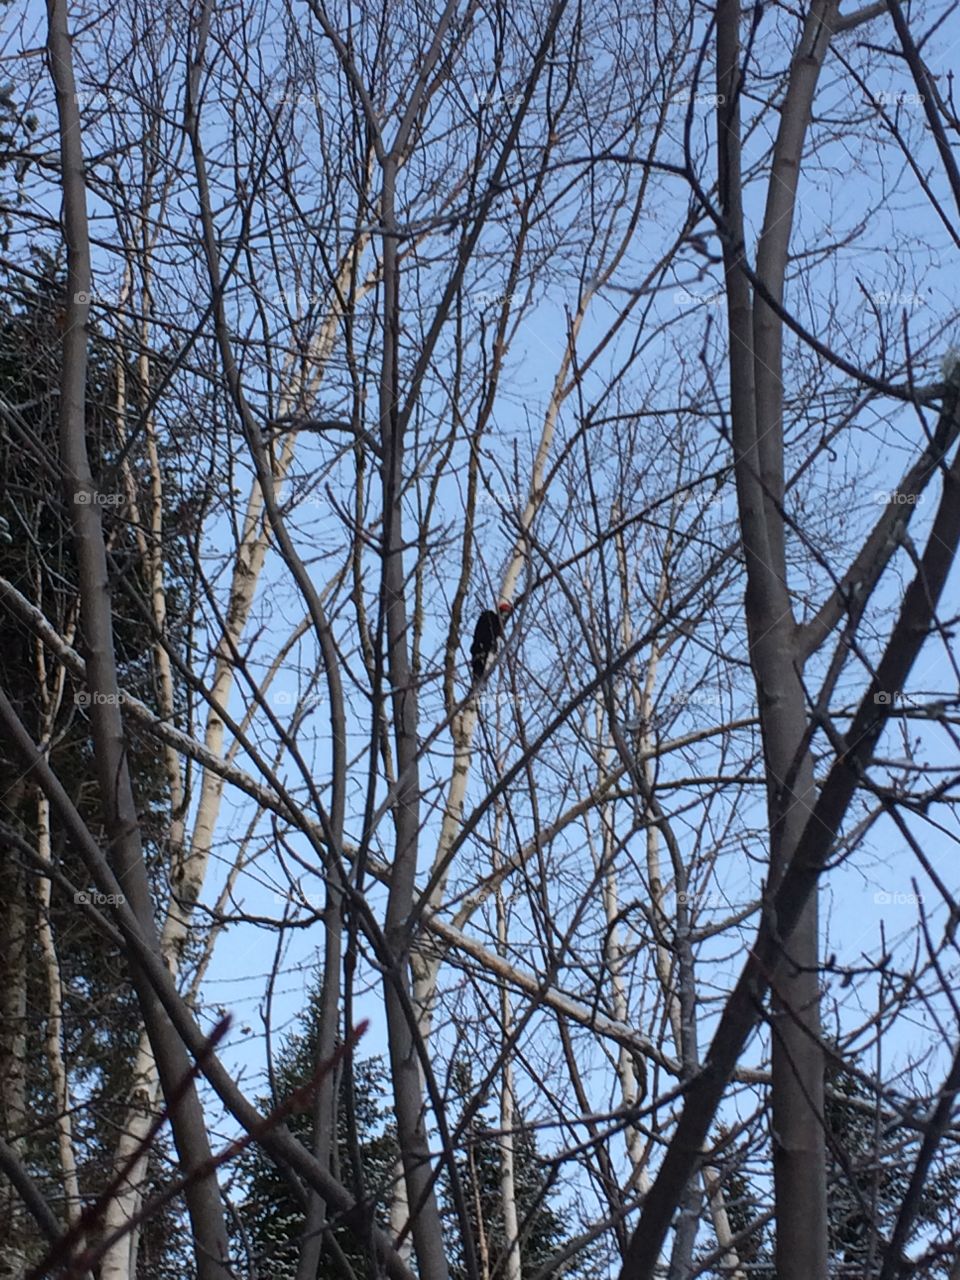 Pileated Woodpecker on a tree 